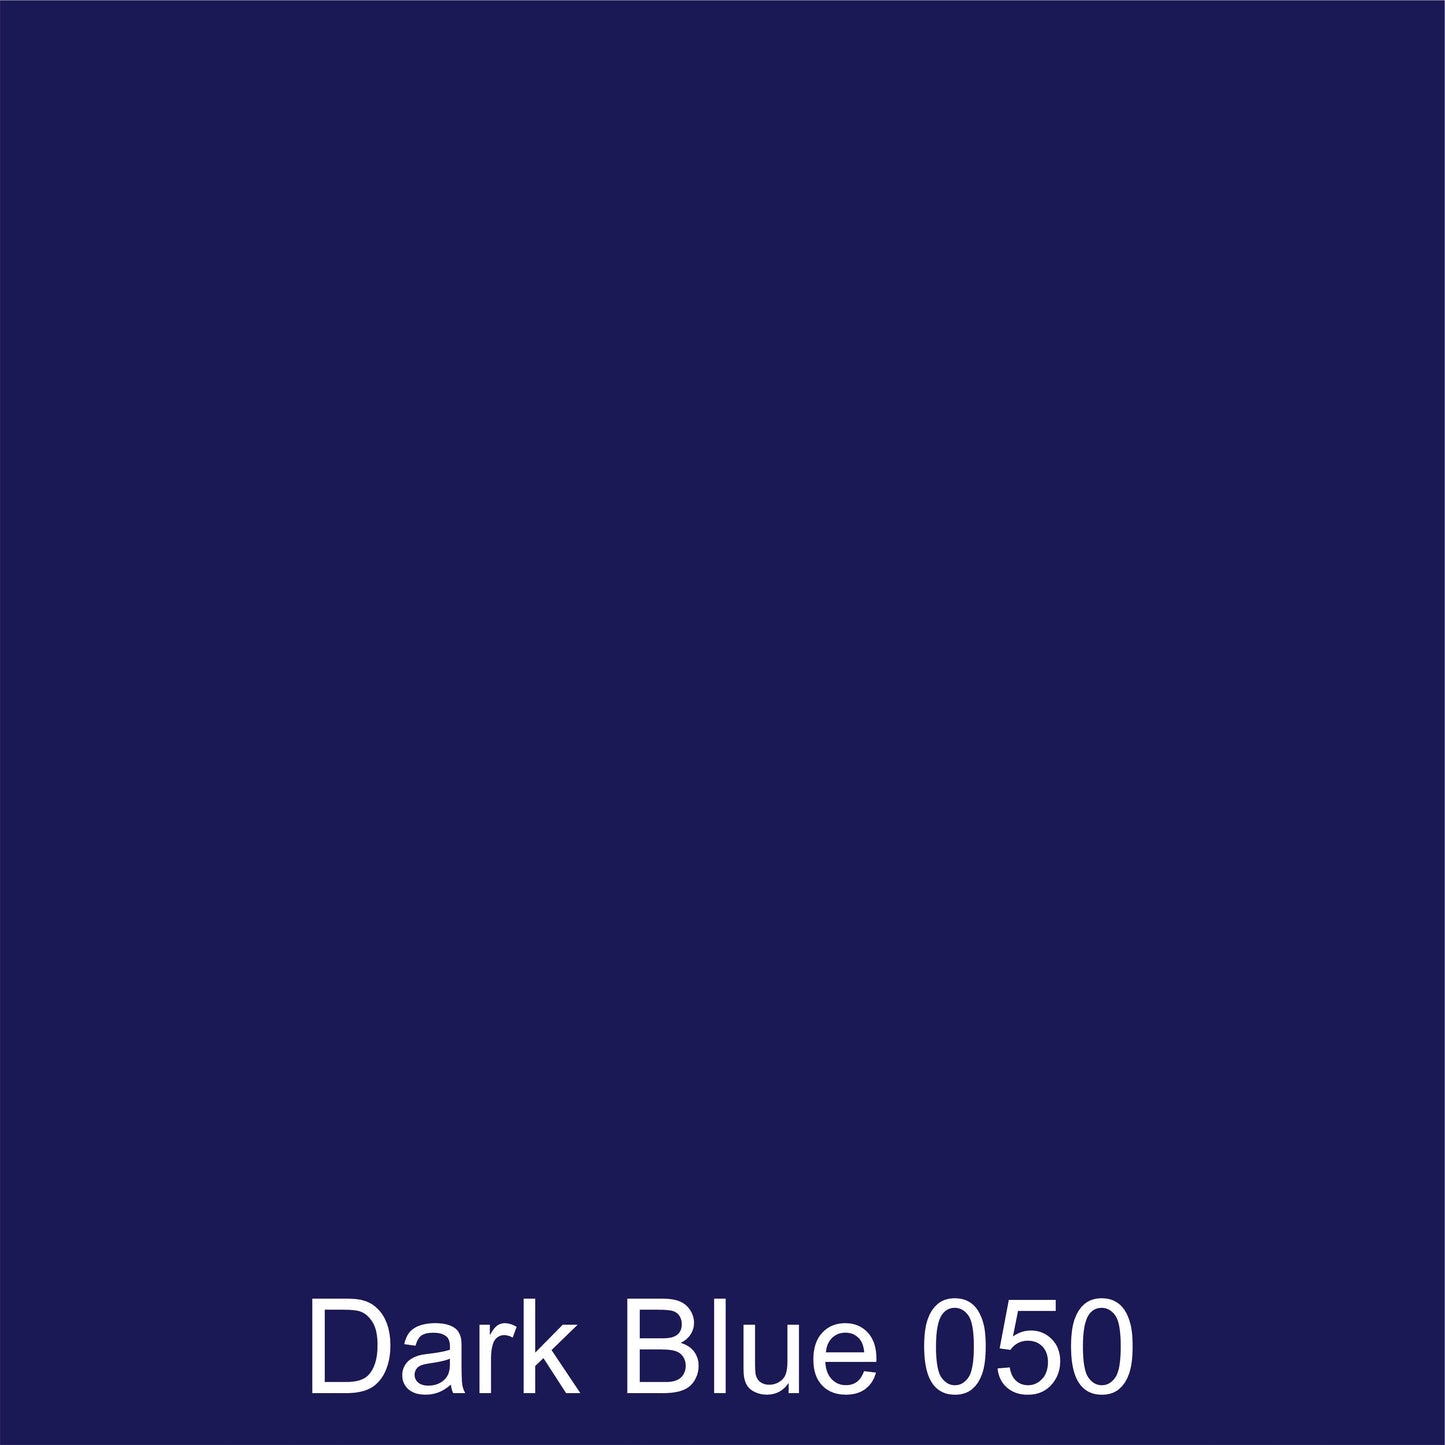 Oracal 651 Gloss :- Dark Blue - 050 - 300mm x 10 Metres